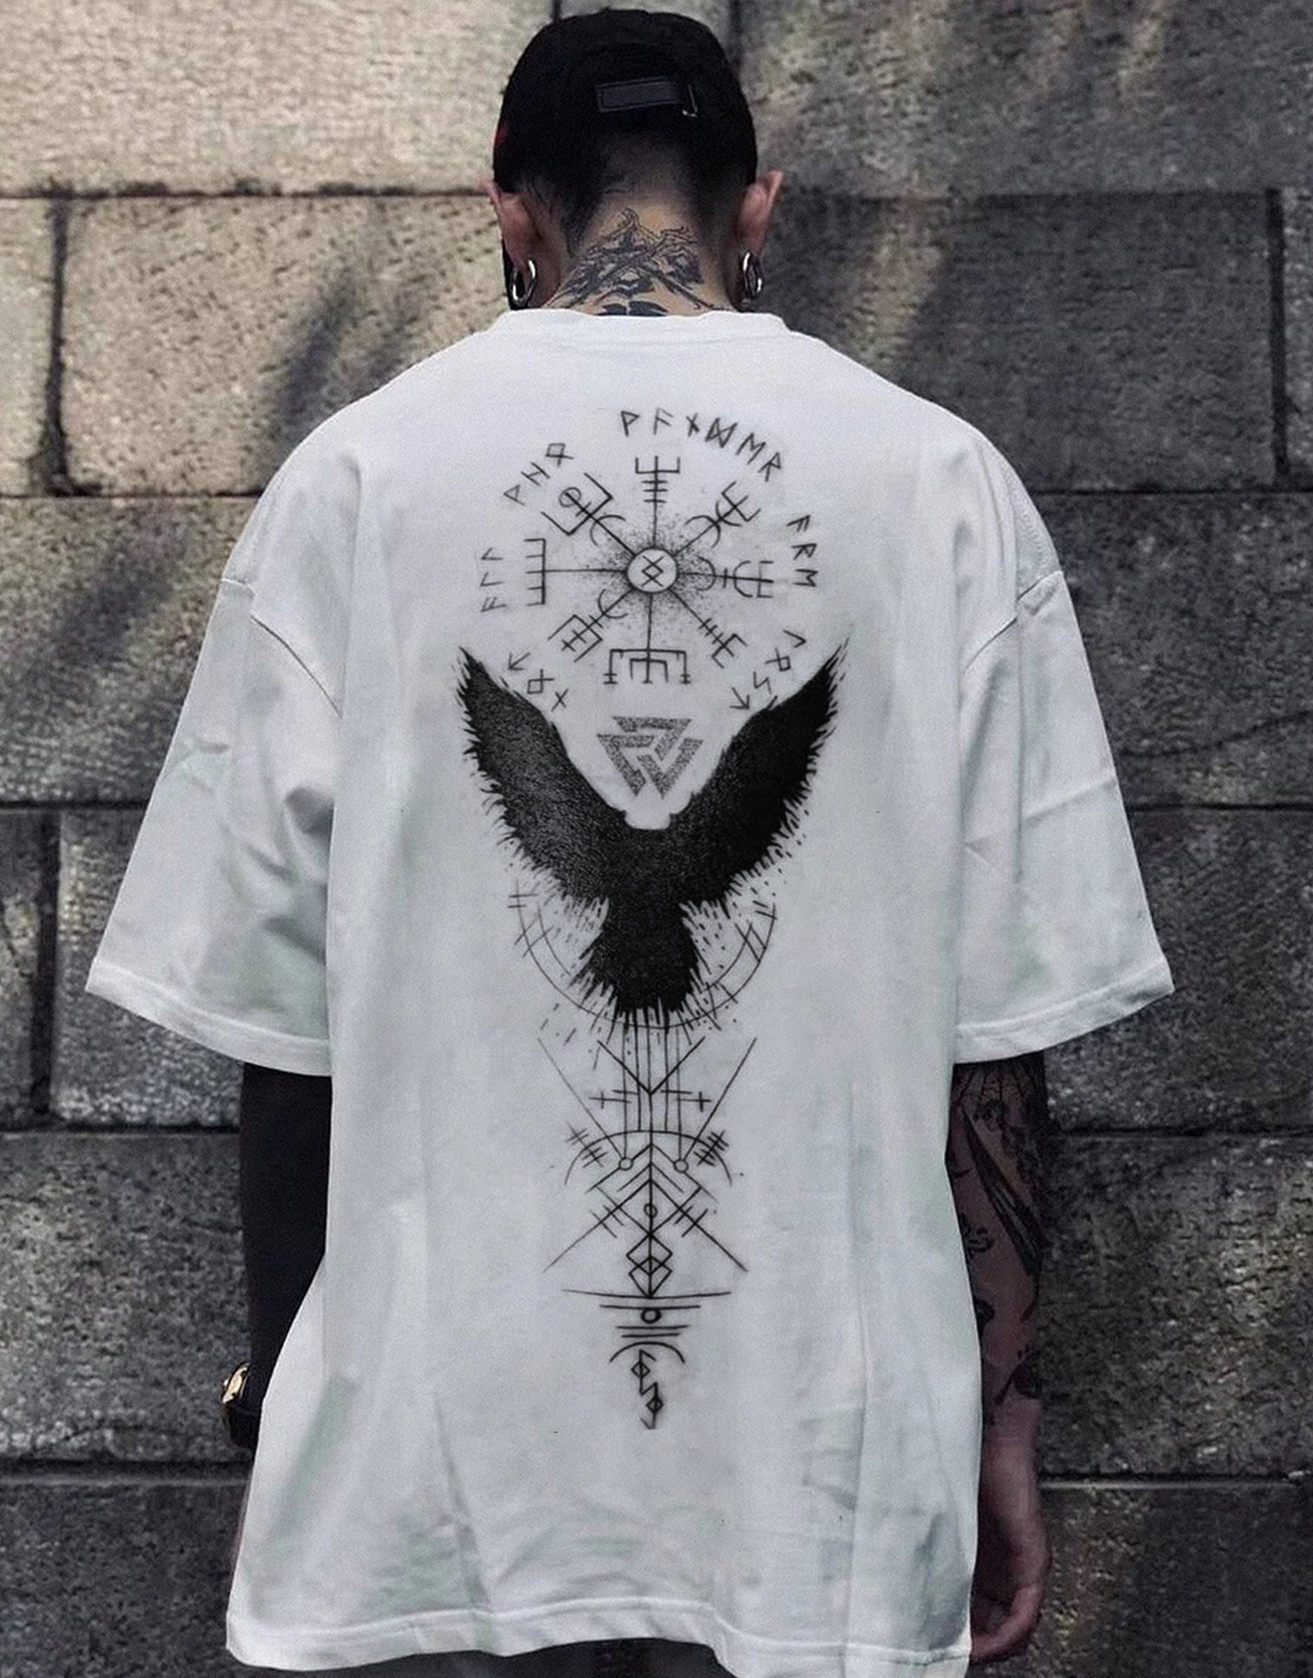 Valkyrie Vintage Spell Raven Totem T-Shirt / TECHWEAR CLUB / Techwear